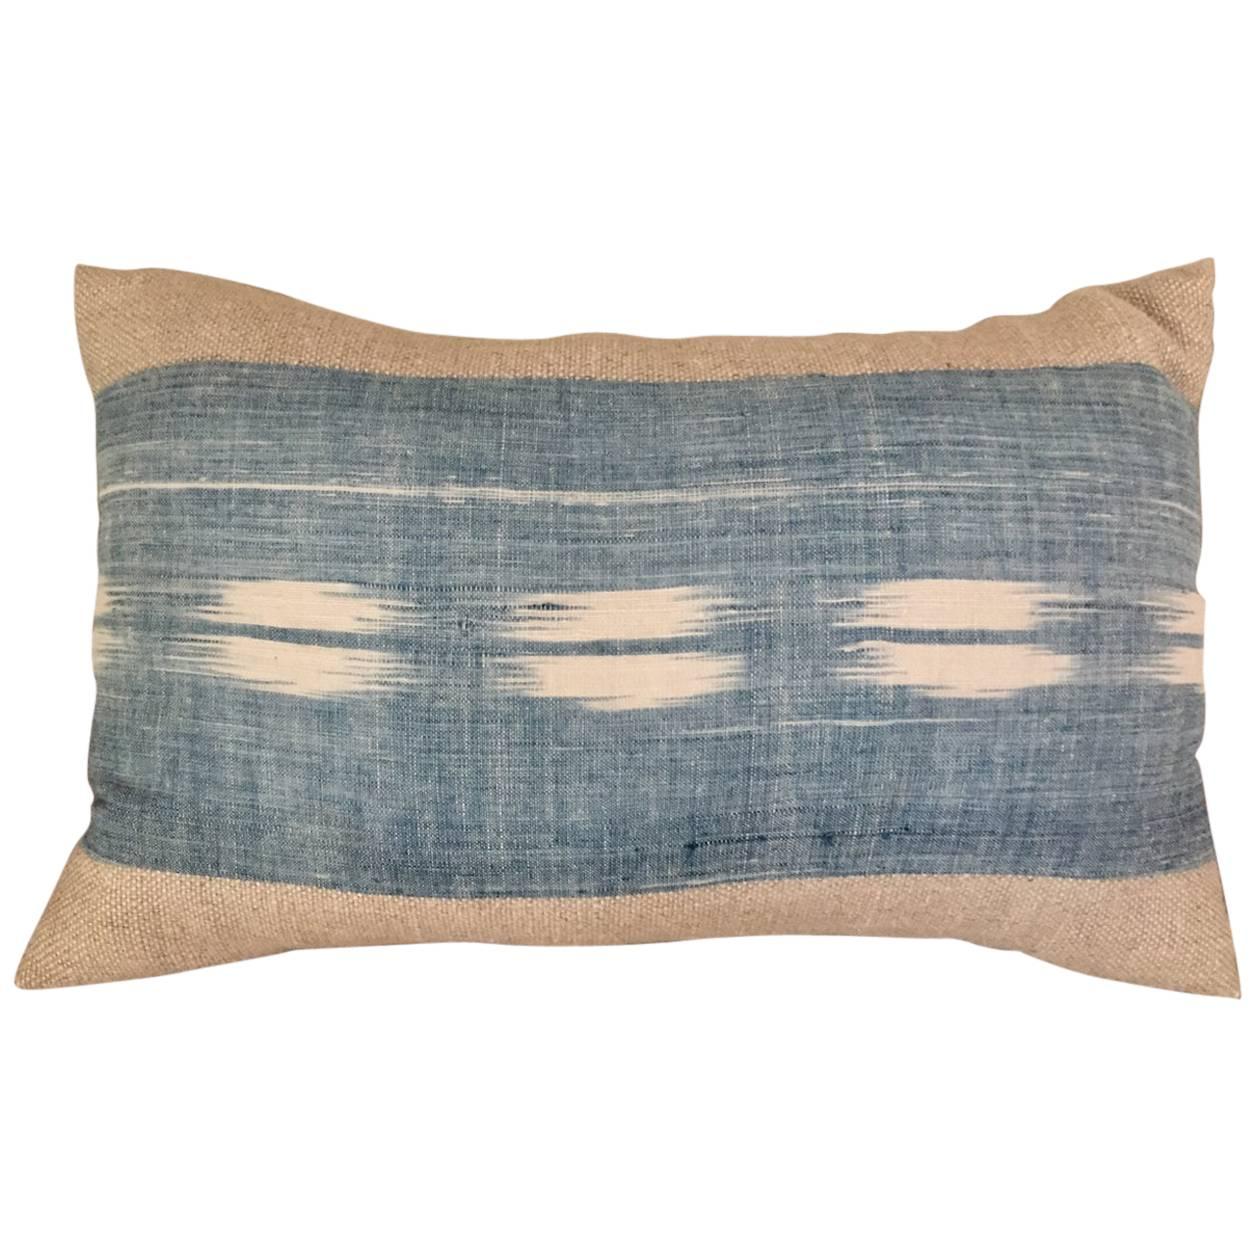 Mid 19th Century French Home Spun Indigo Dyed Ikat Pillow